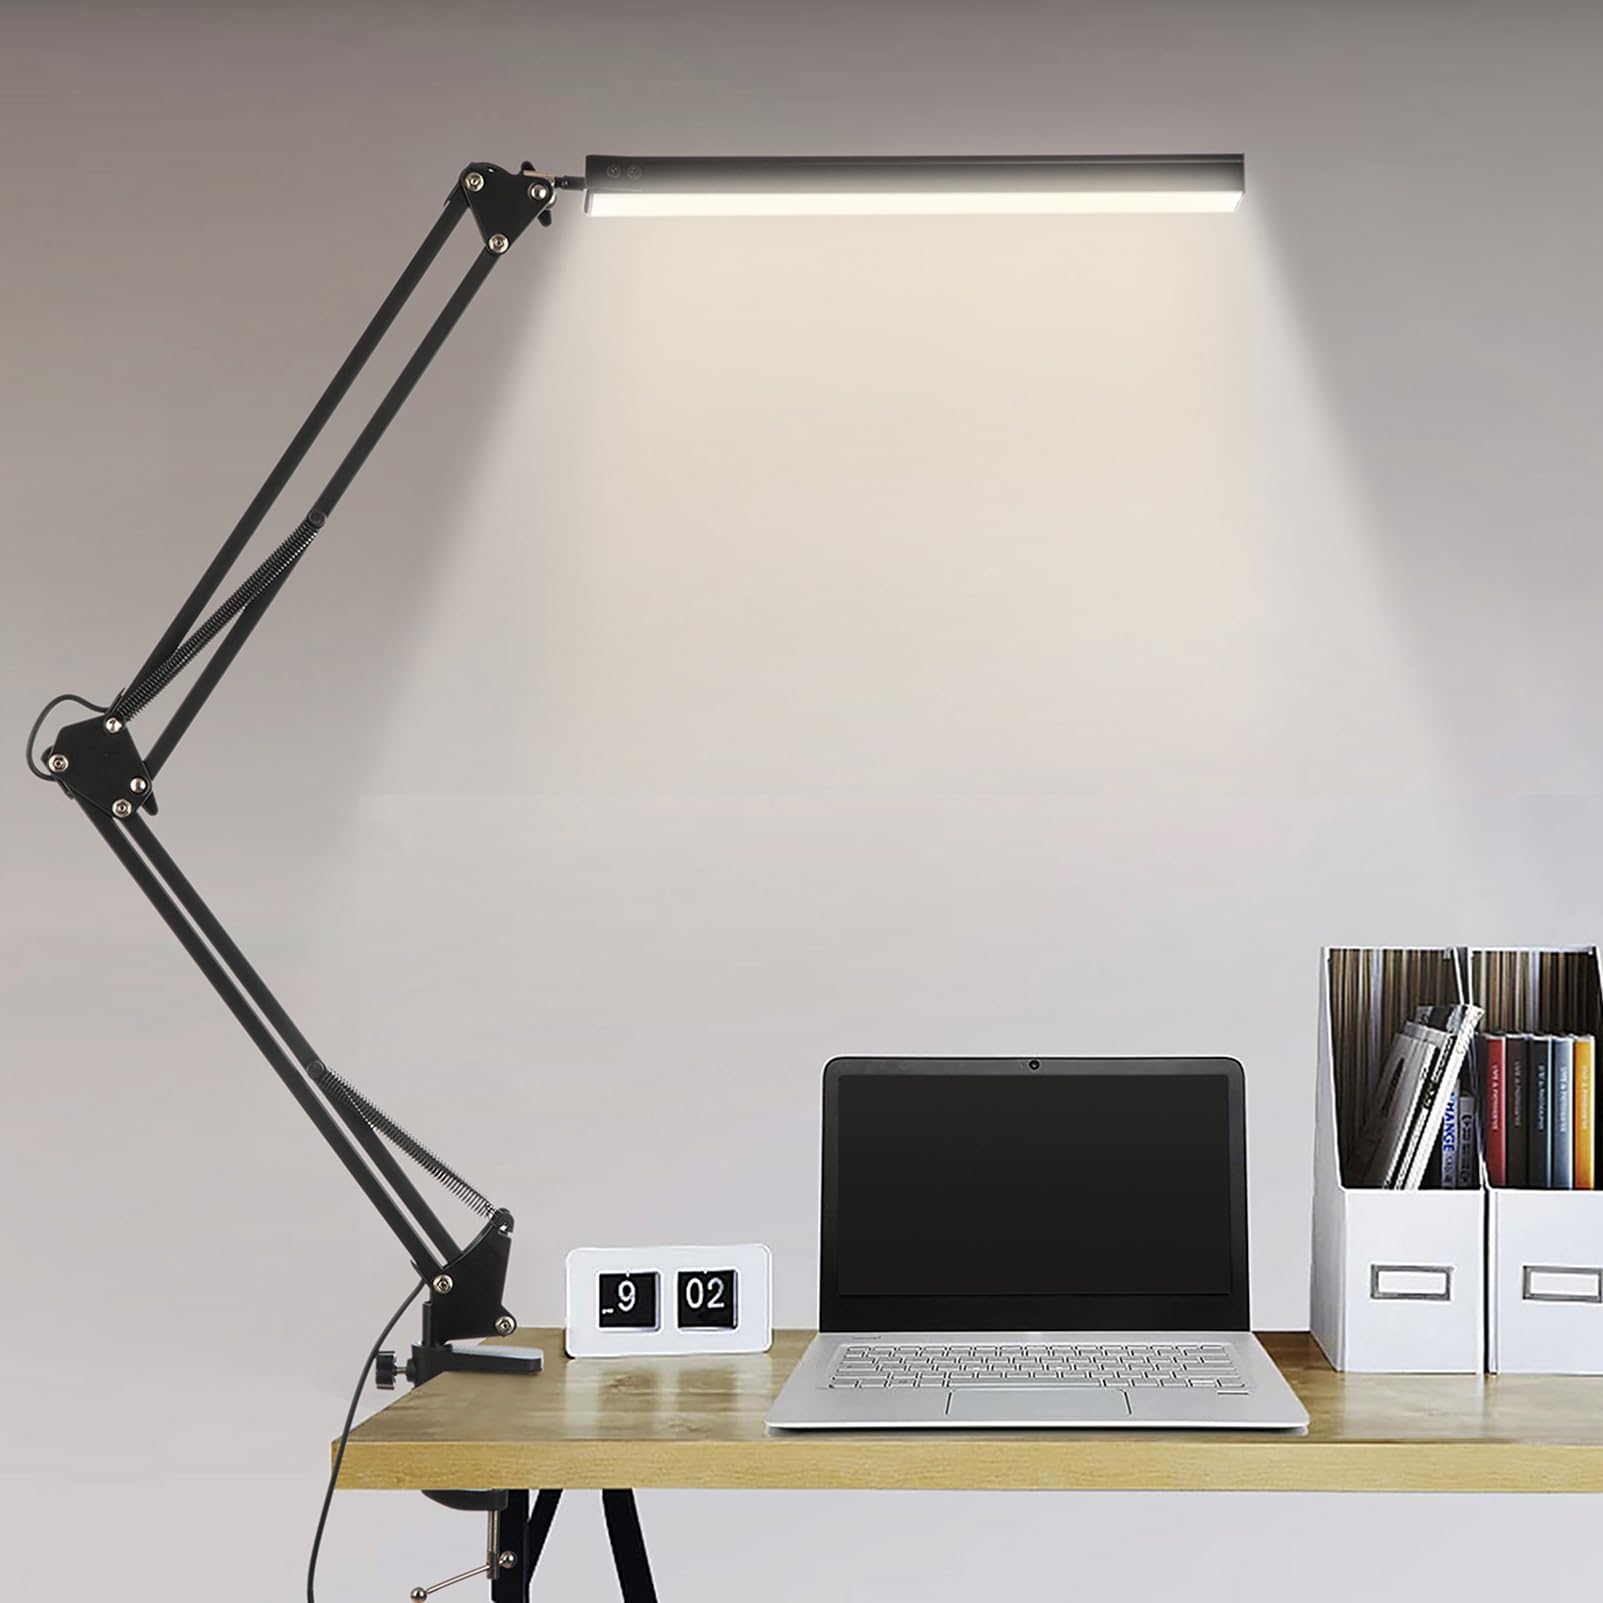 Desk lamp with adjustable brightness